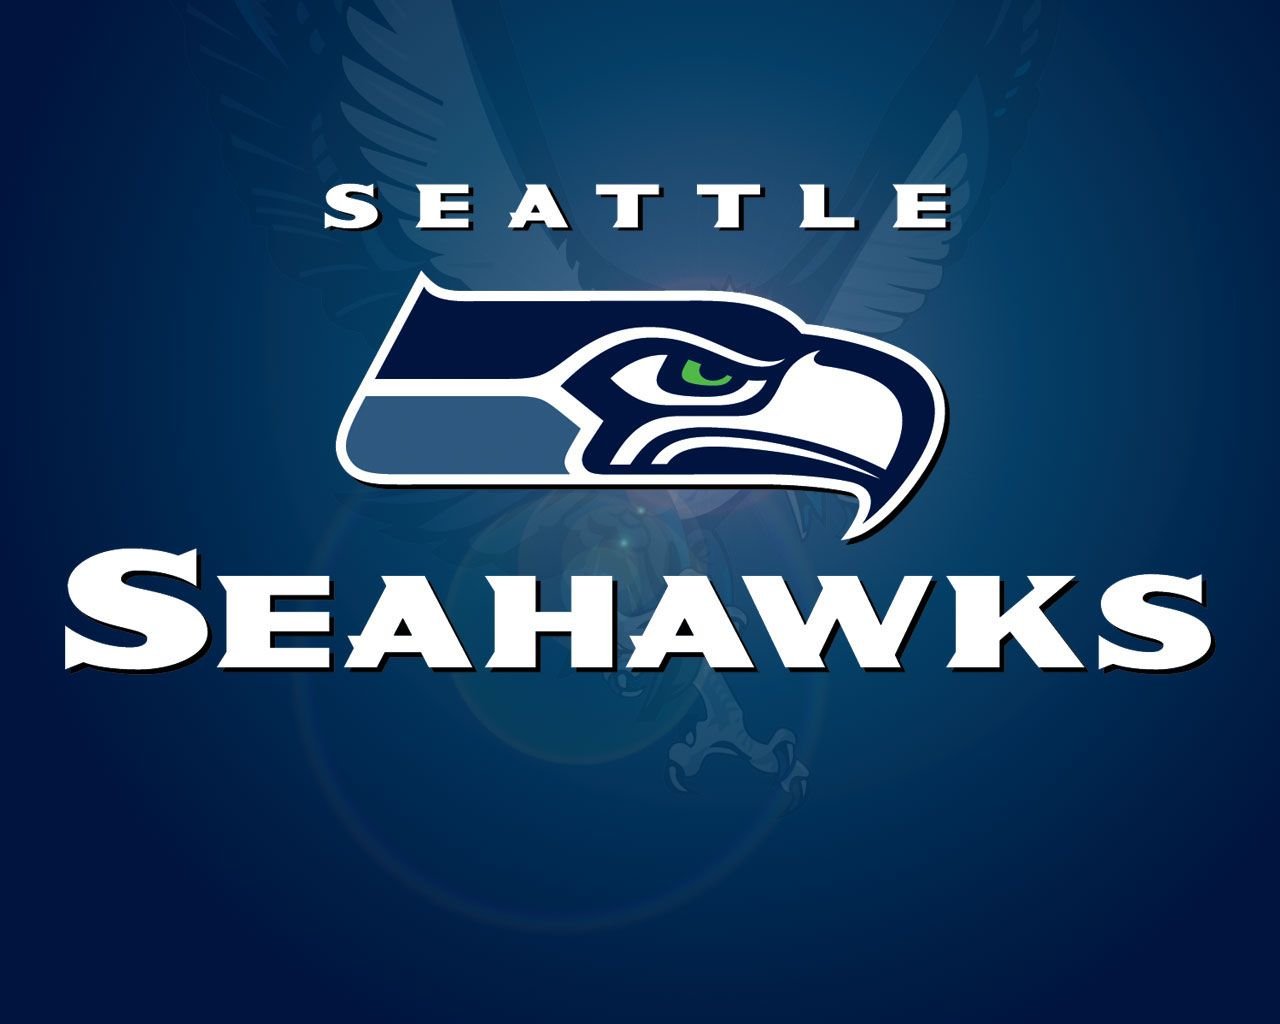 seattle seahawks name and logo wallpaper 1280x1024 photo